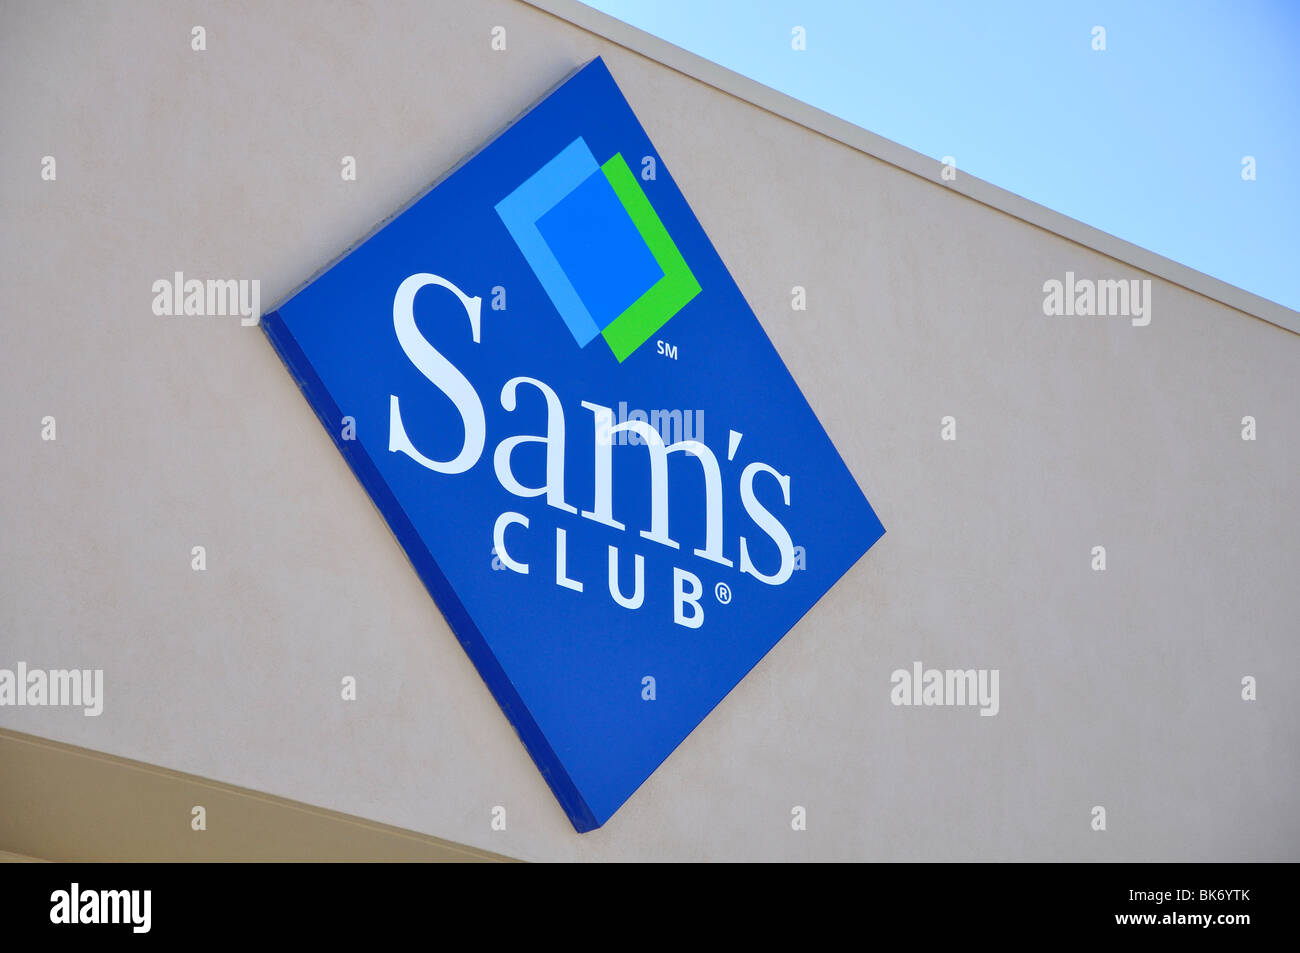 Sam's club store, Texas, USA Stock Photo